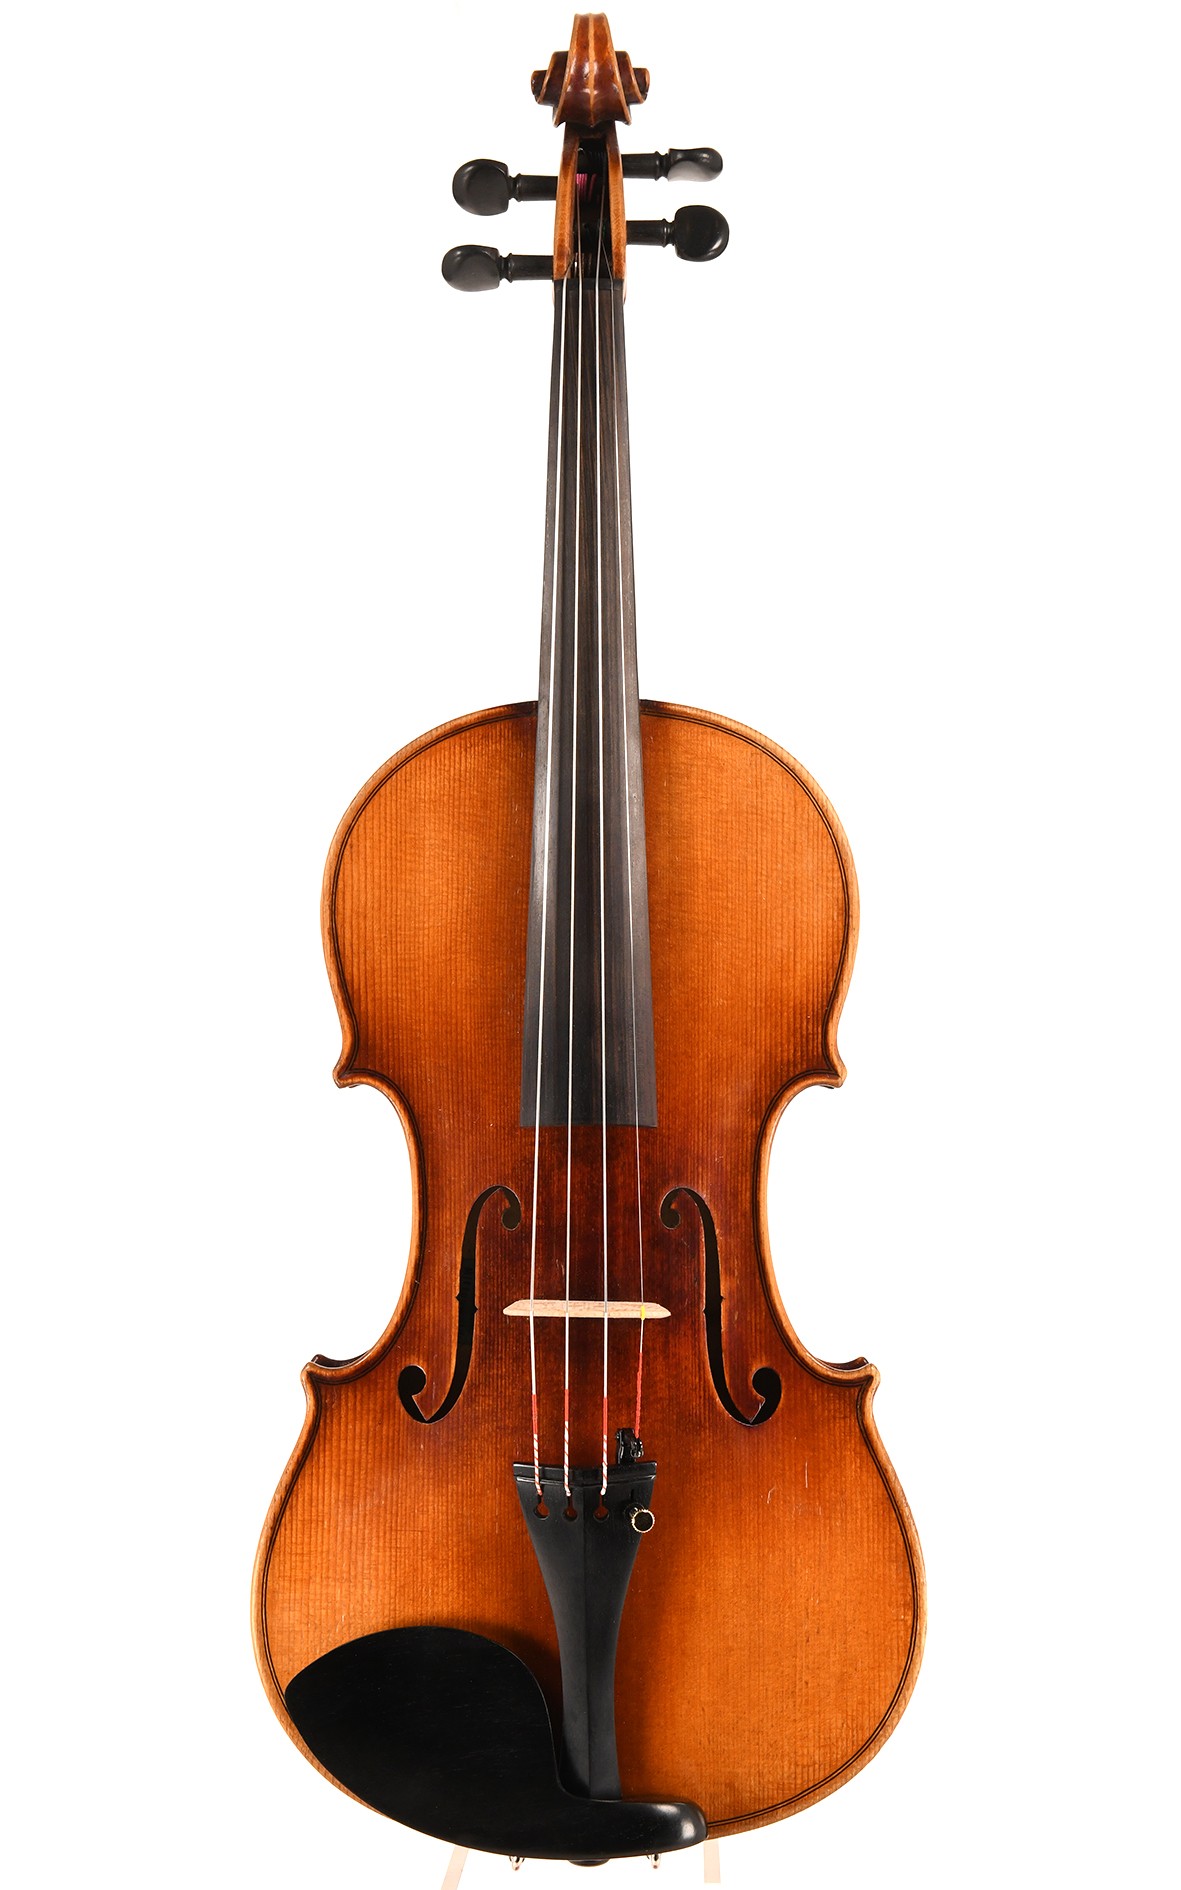 Rare violon de Mittenwald par Johann Baptist Reiter, daté de 1882